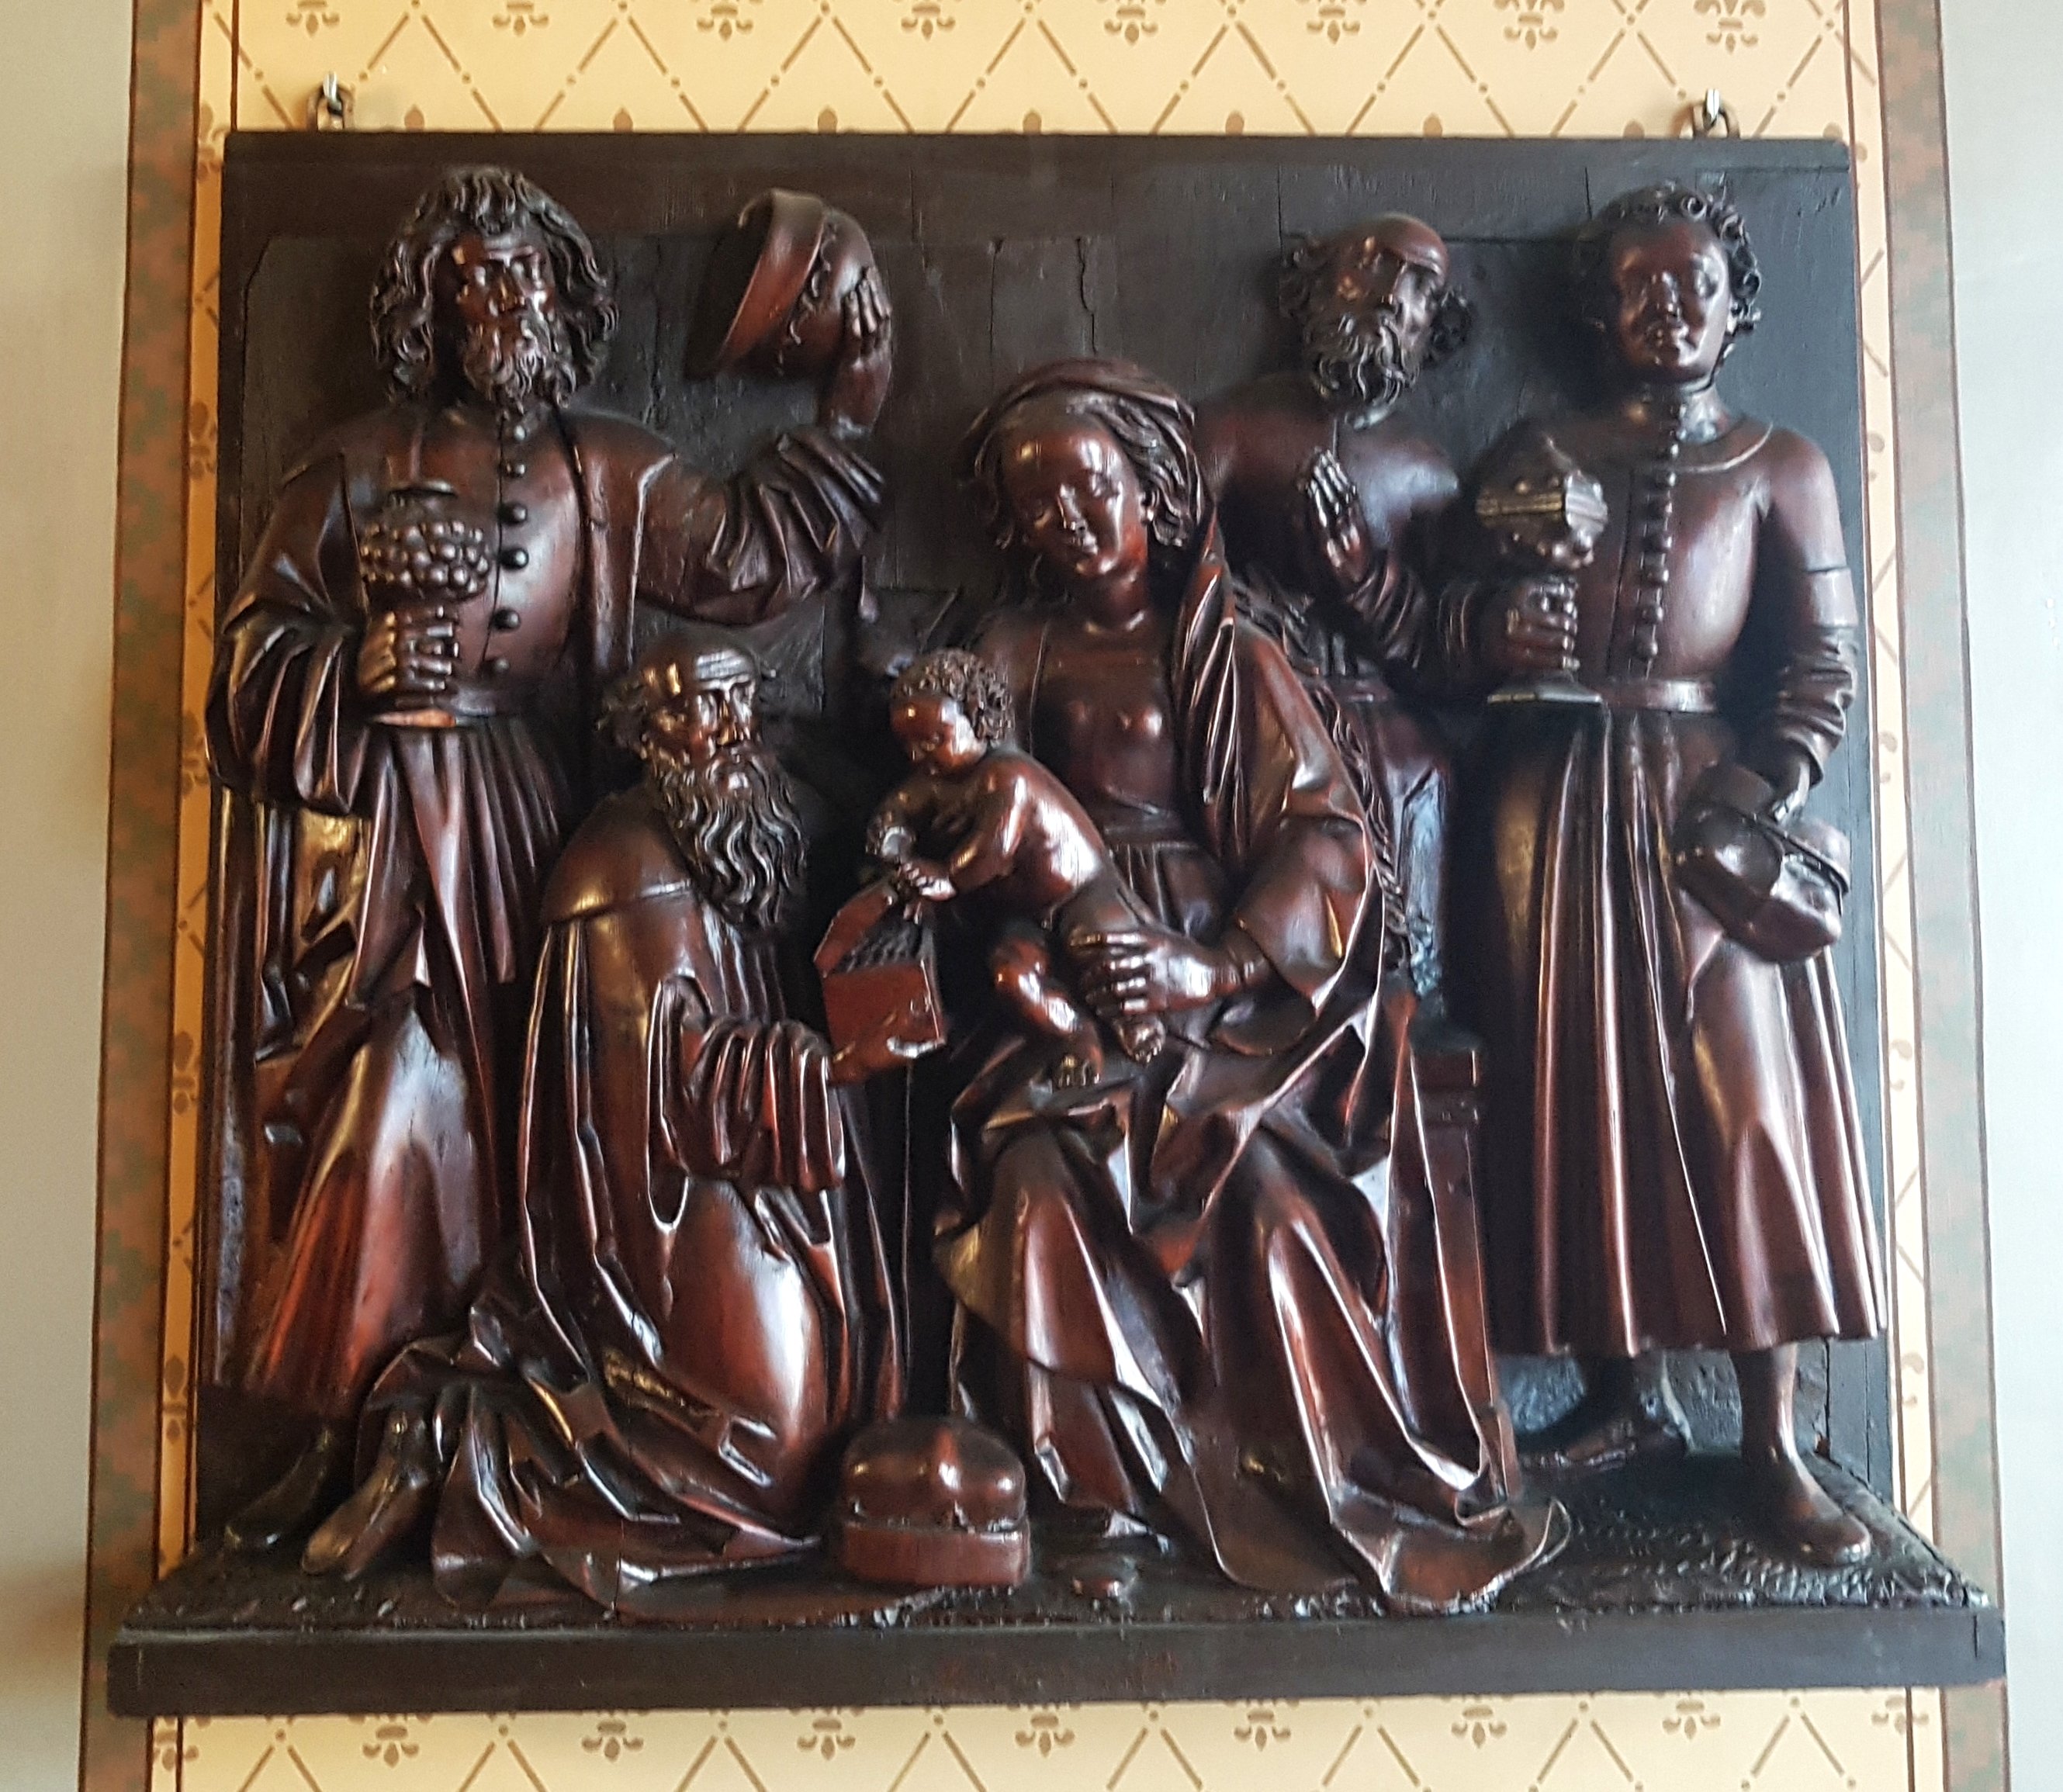 Holzplastik "Anbetung der Heiligen Drei Könige", Nürnberger Schule, um 1520 (Schloß Wernigerode GmbH RR-F)